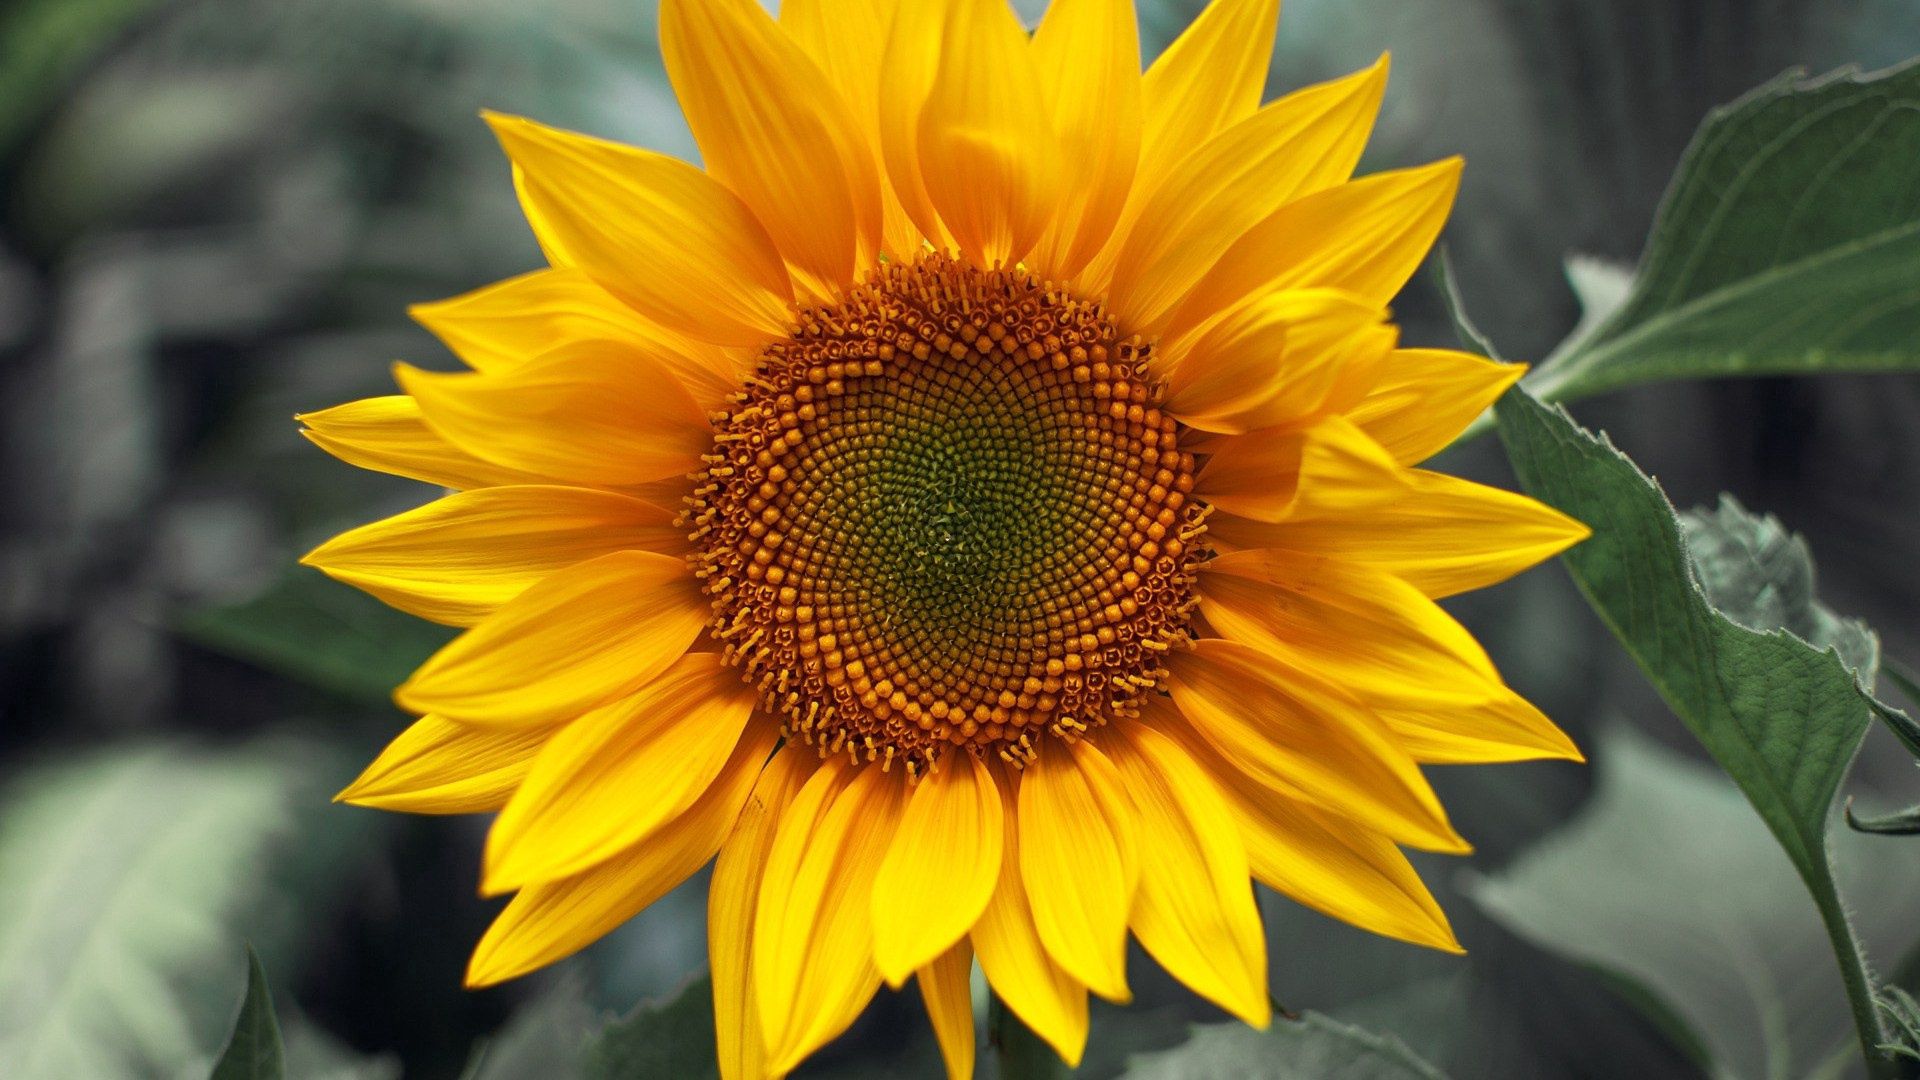 Best Mobile Sunflower Backgrounds